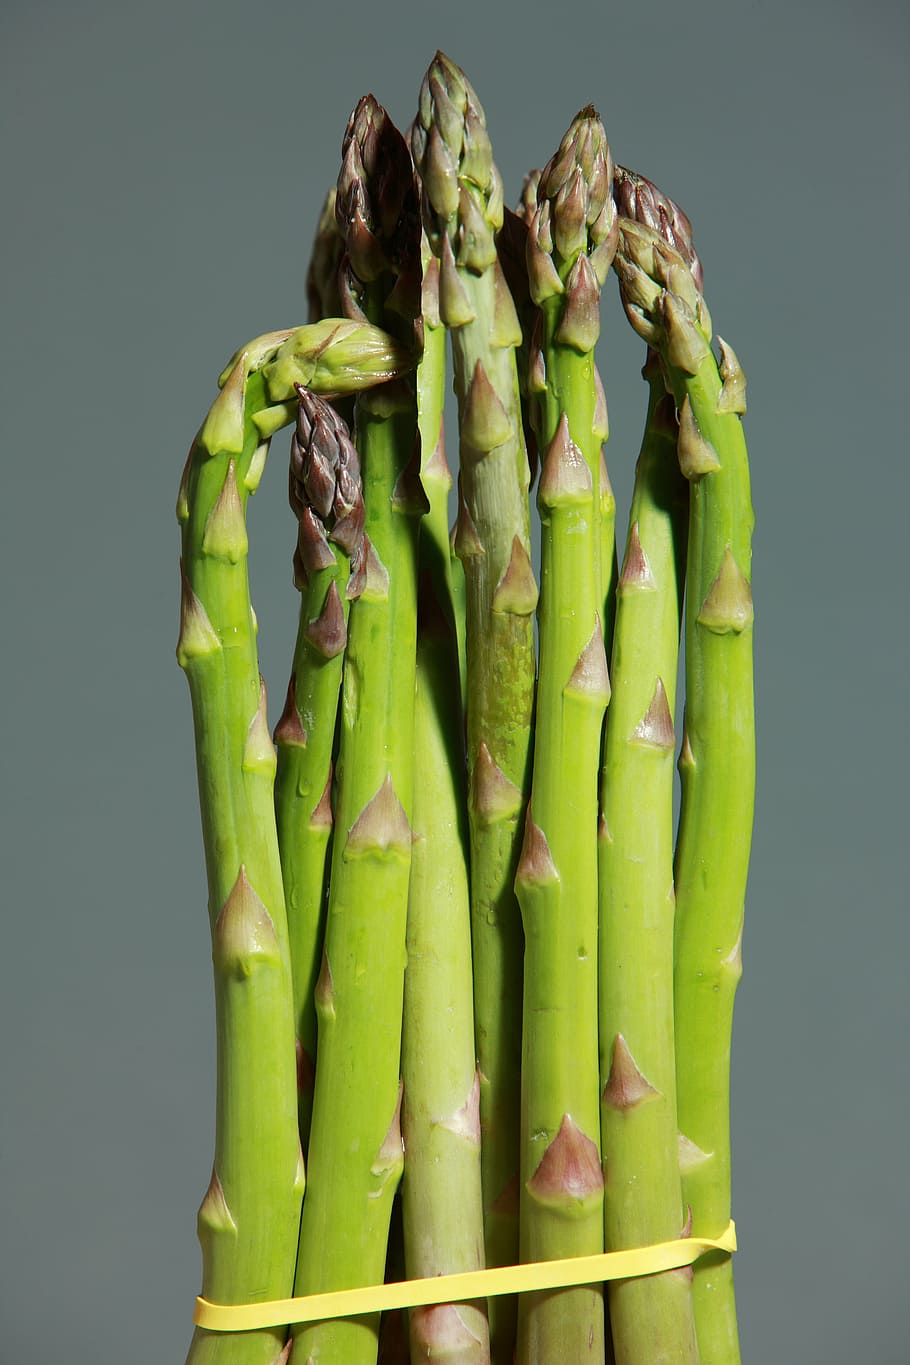 bunch of asparagus, green asparagus, asparagus, green, vegetables, eat, healthy, plant, asparagus fern, cook